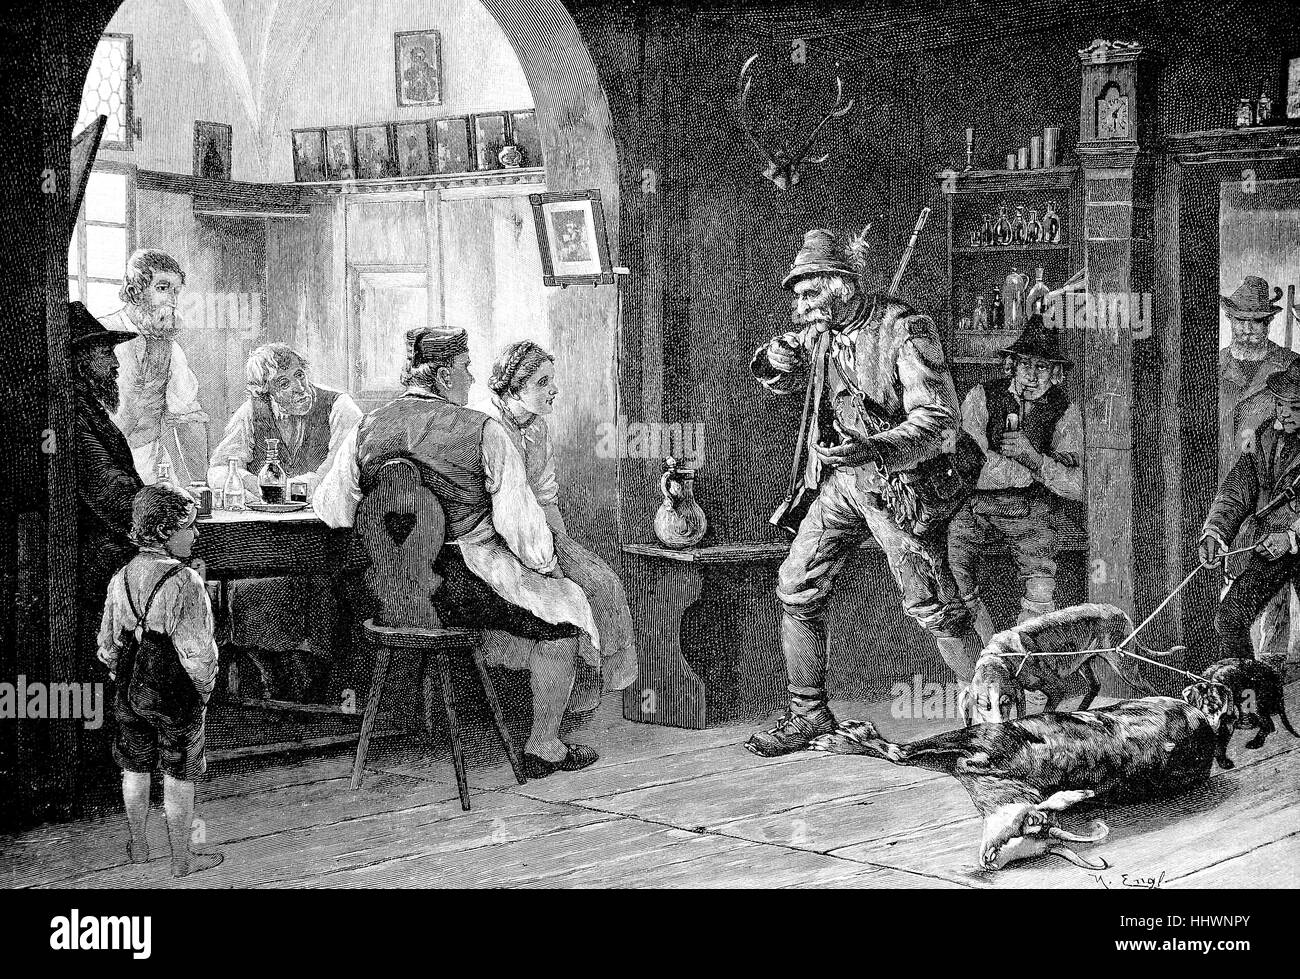 The master-shot, after the painting of Hugo Engl, huntsman brings his slaughtered game home, Austria, historical image or illustration, published 1890, digital improved Stock Photo